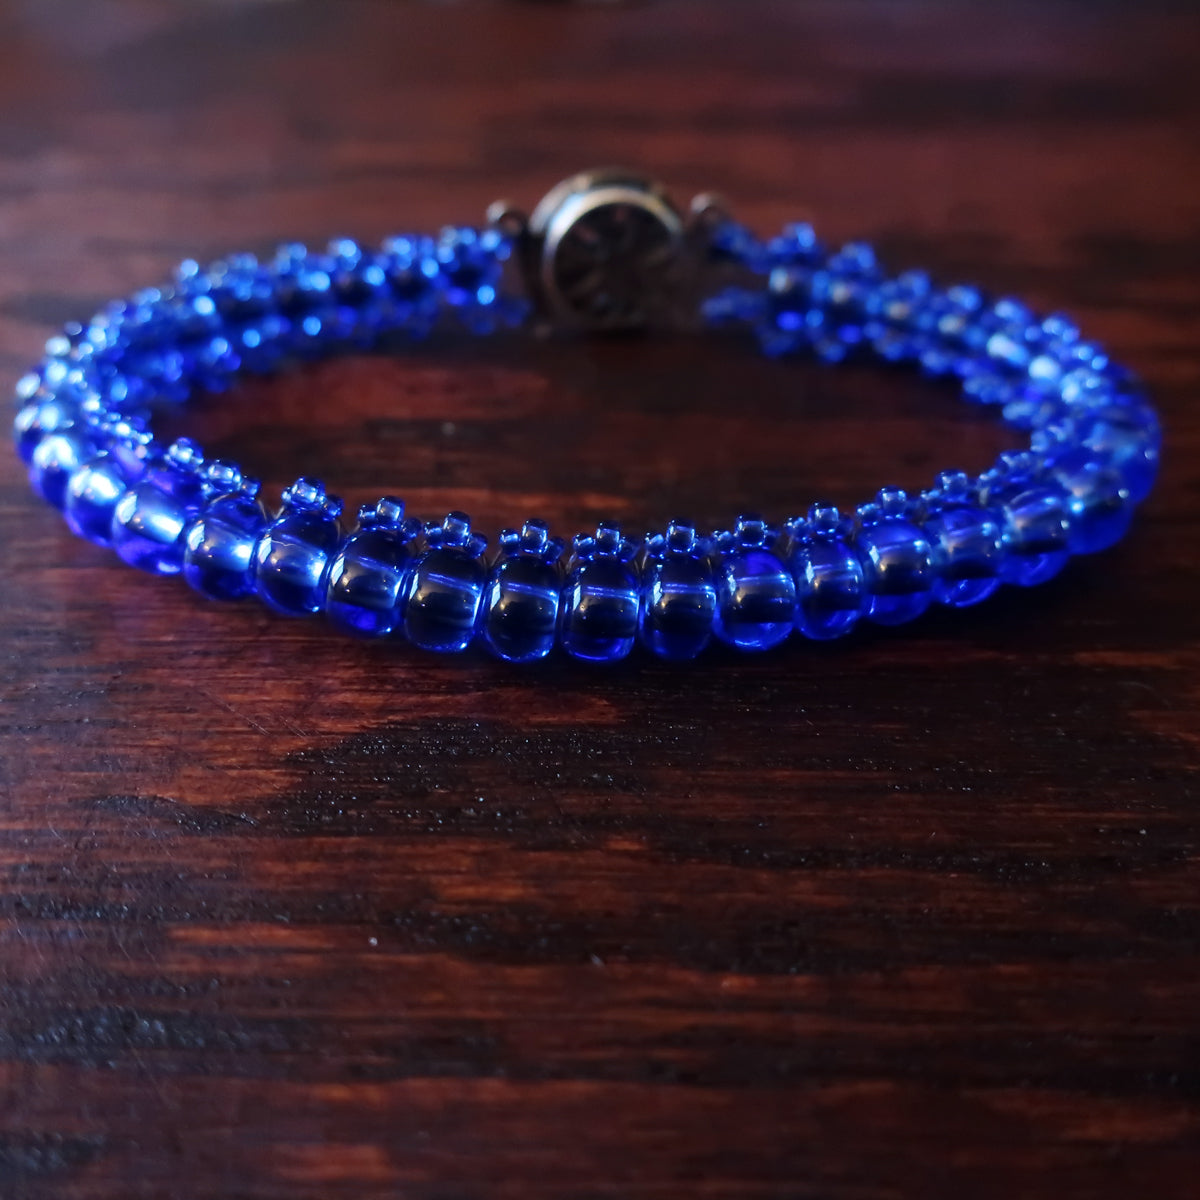 Temple Tree Bohemian Glass Bead Caterpillar Weave Bracelet - Sapphire Blue